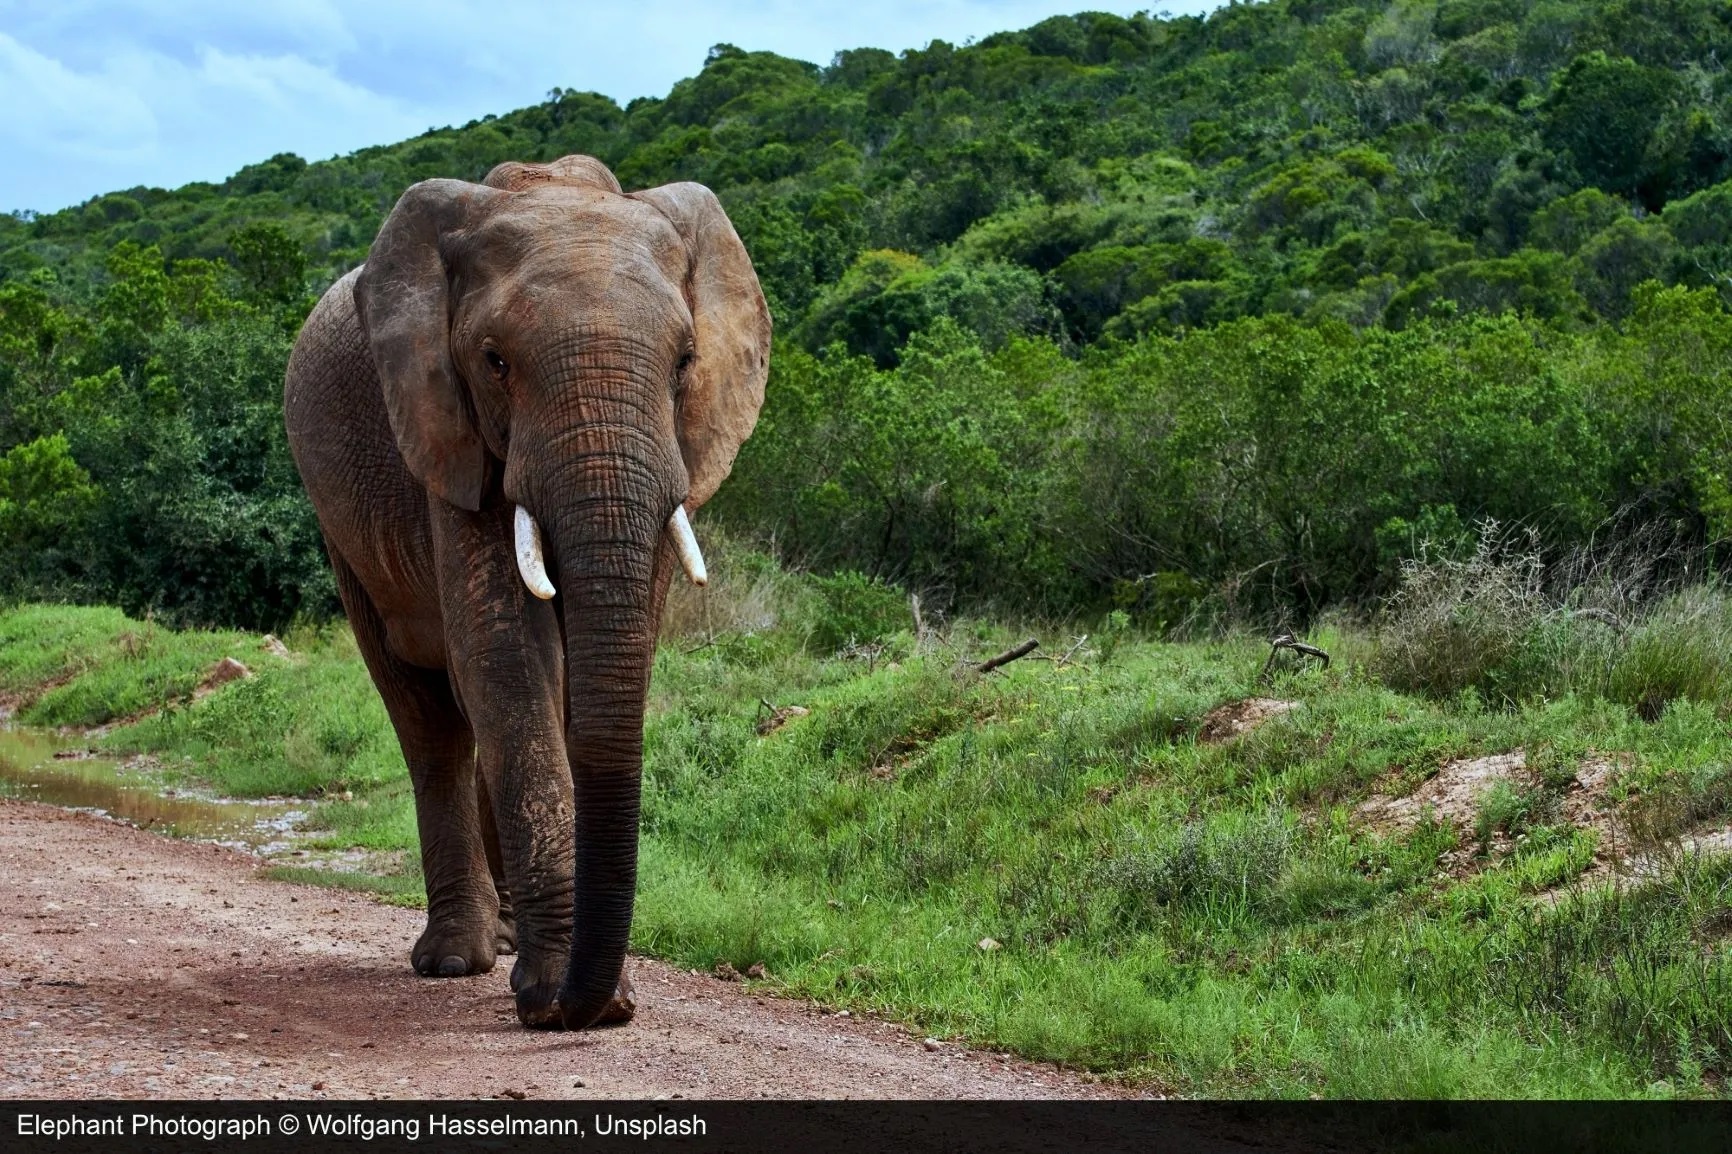 Photograph of elephant